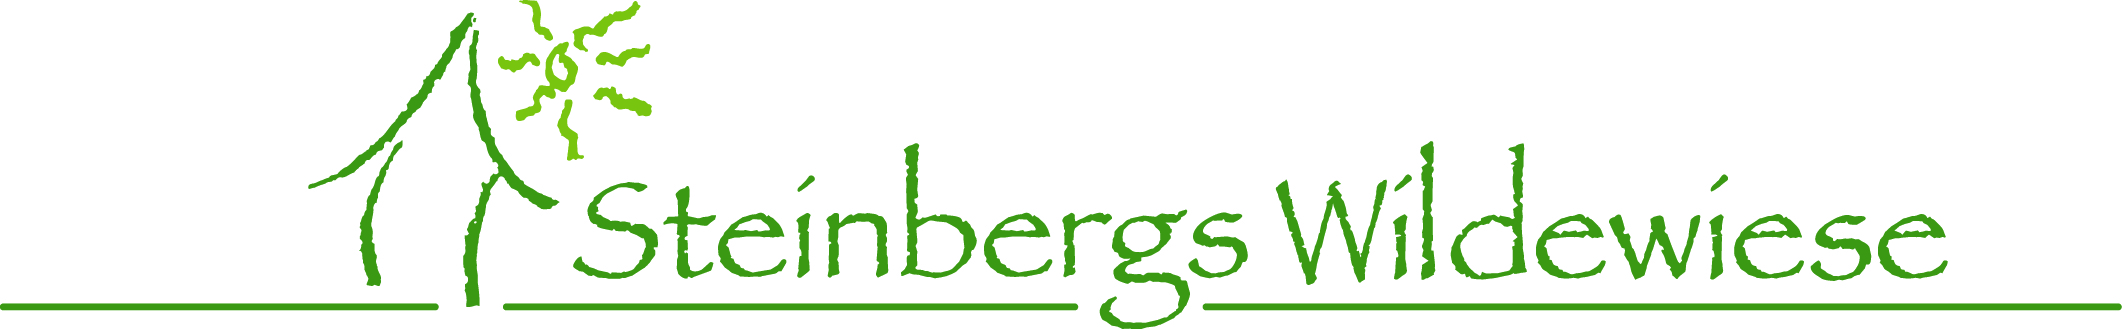 logo steinbergs wildewiese